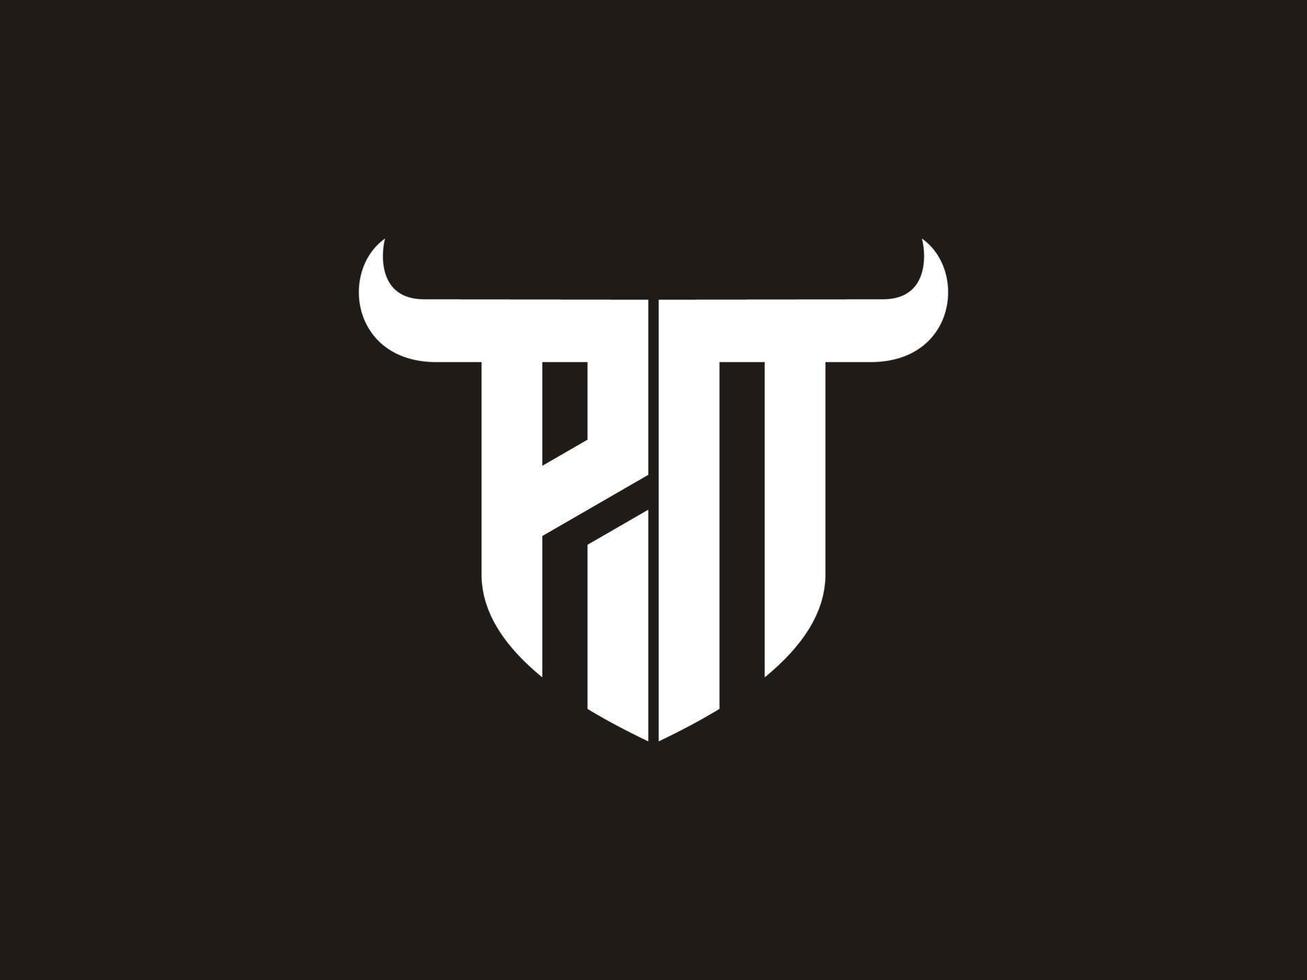 diseño inicial del logotipo pn bull. vector